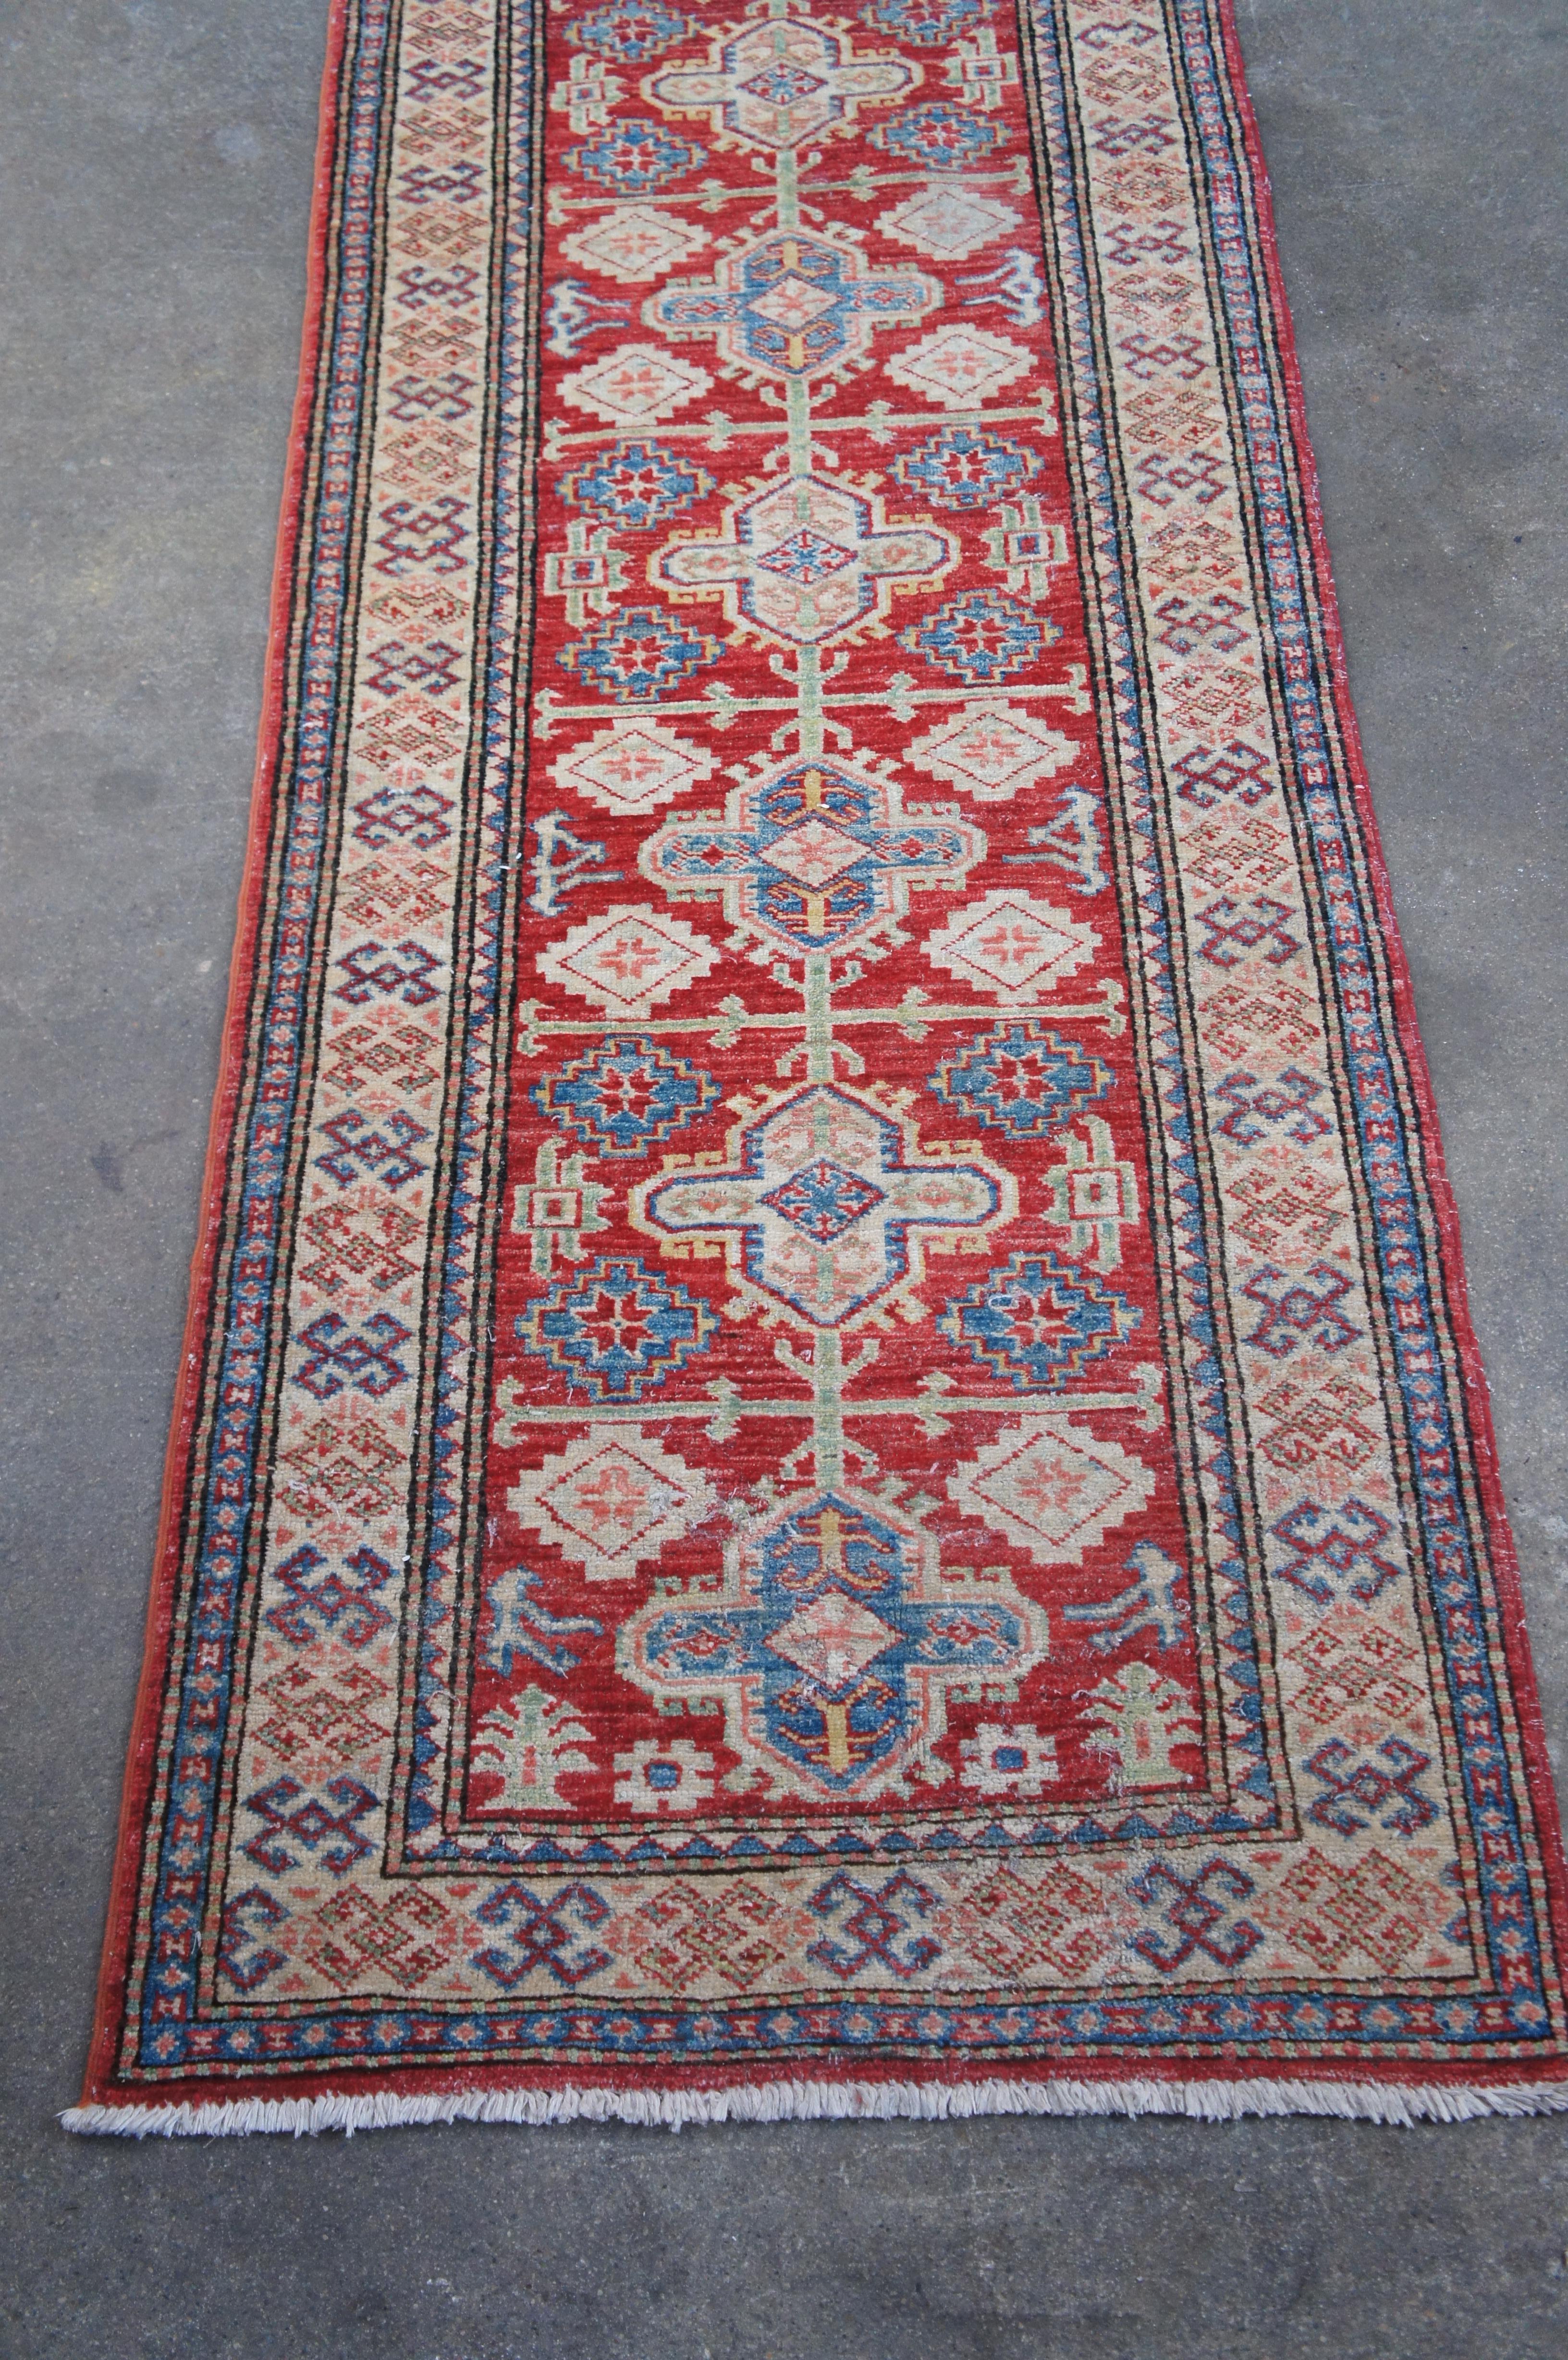 20th Century Vintage Pakistani Geometric Kazak 100% Wool Red Rug Runner Carpet 2.5' x 7' For Sale